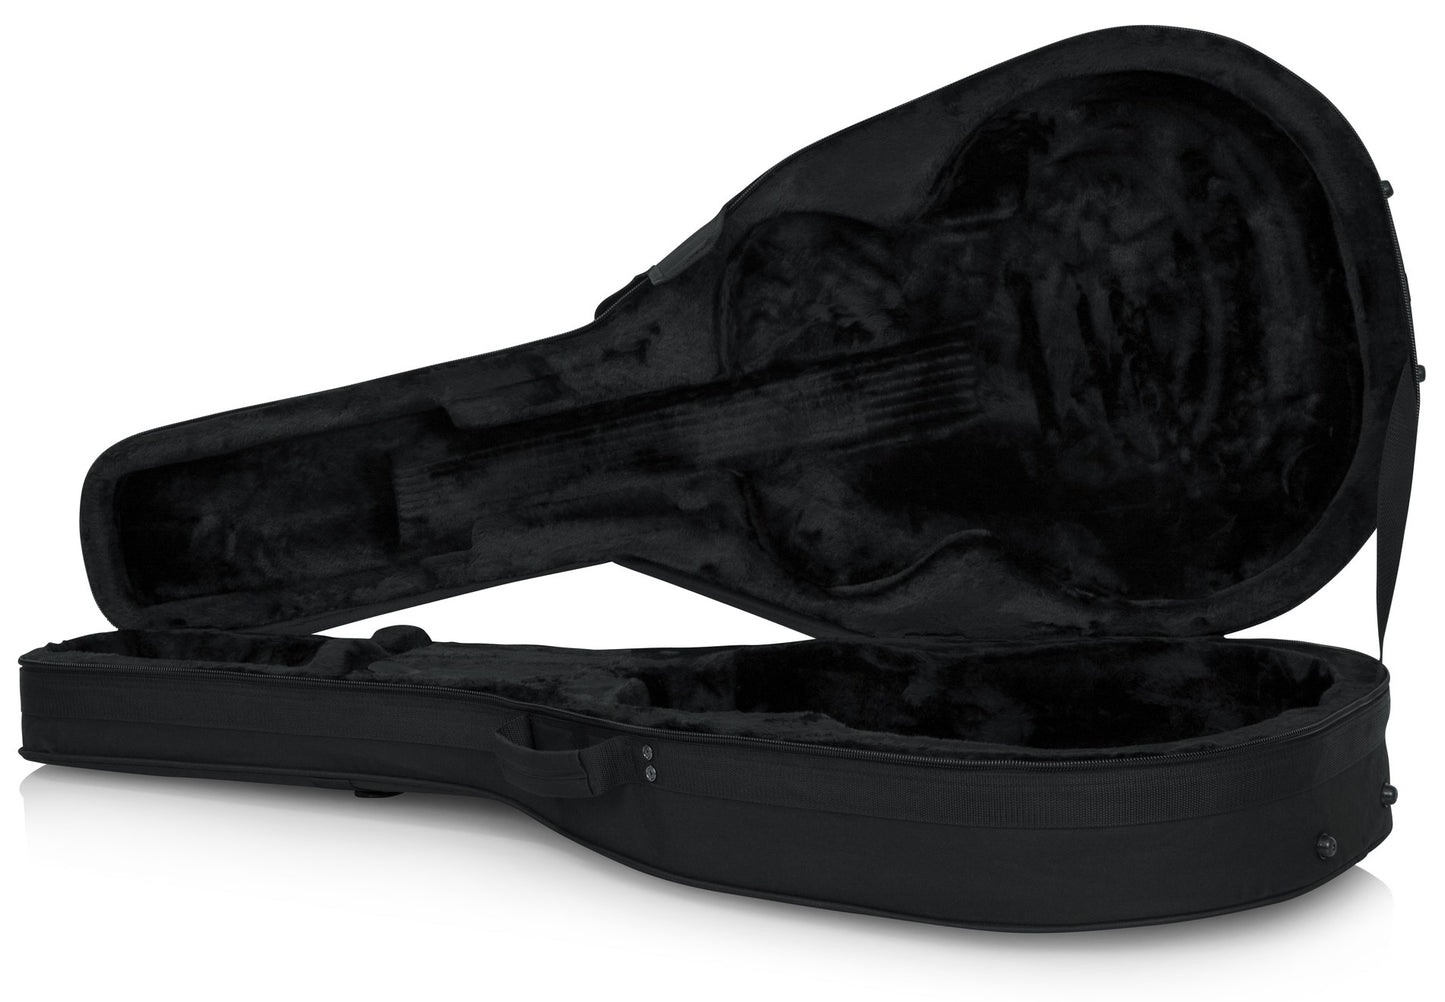 Gator GL-JUMBO Lightweight Polyfoam Jumbo Acoustic Guitar Case